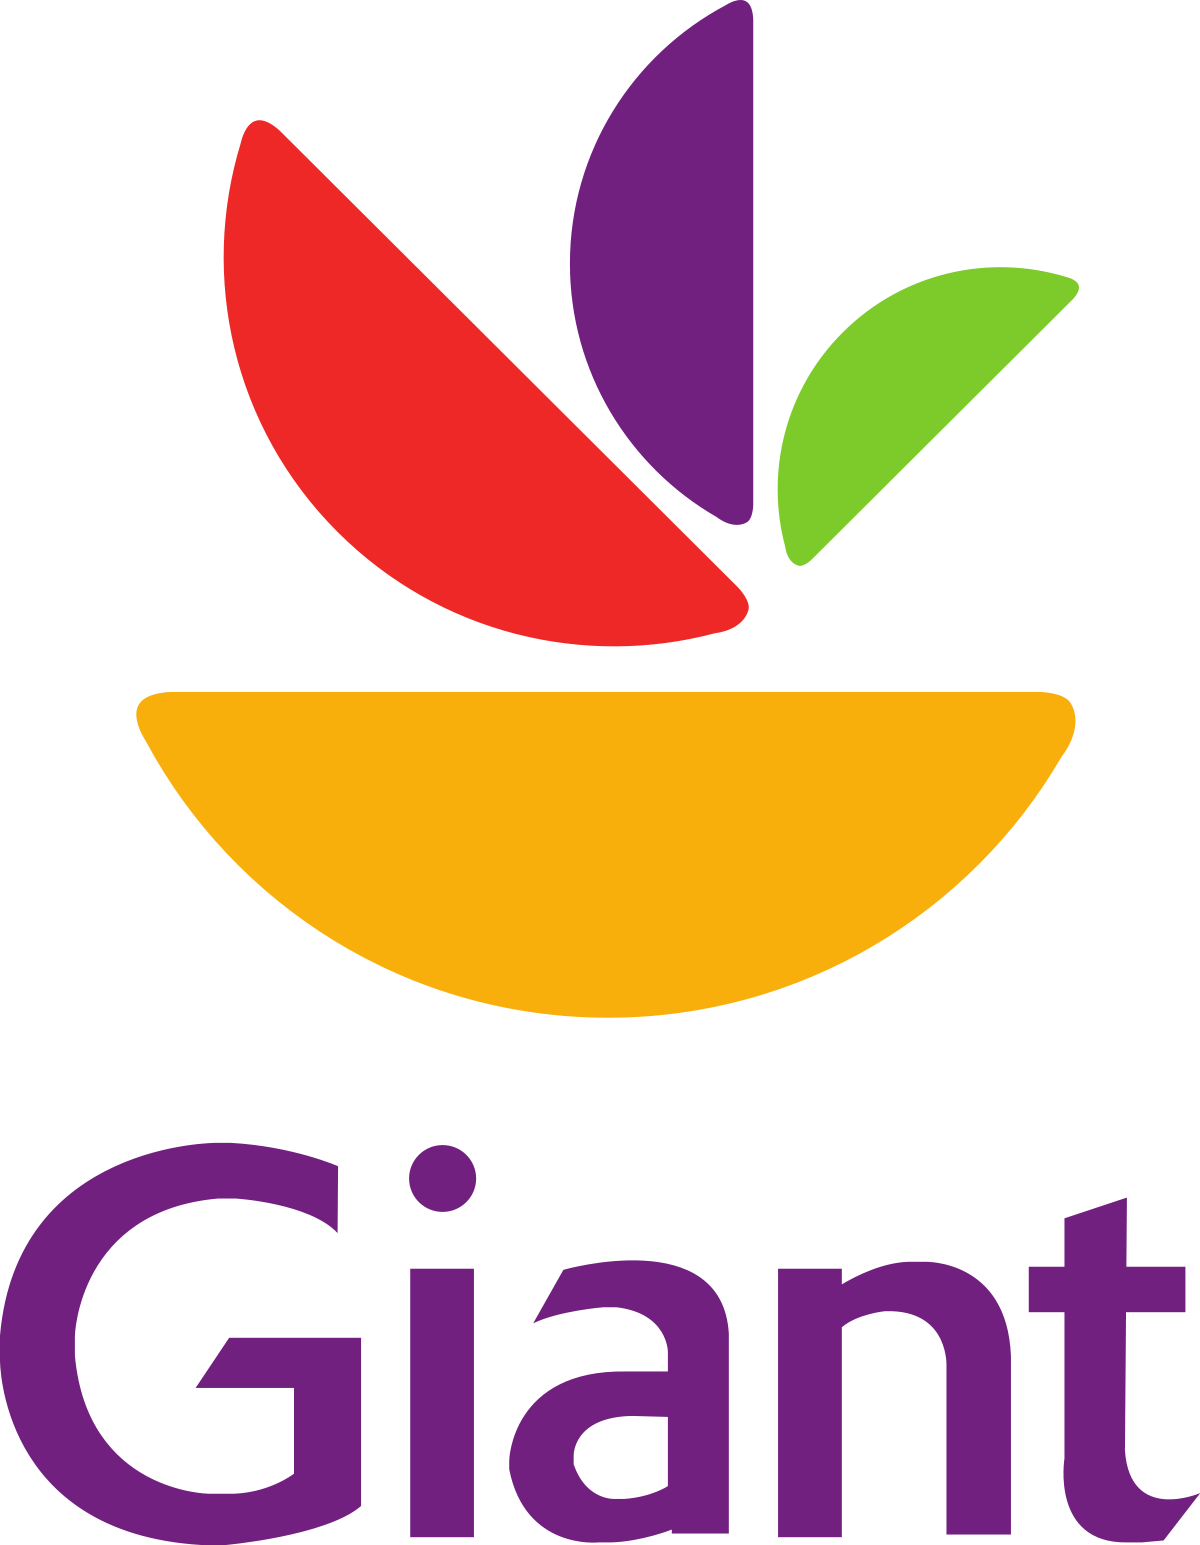 Google Maps Food Logo - Giant-Landover